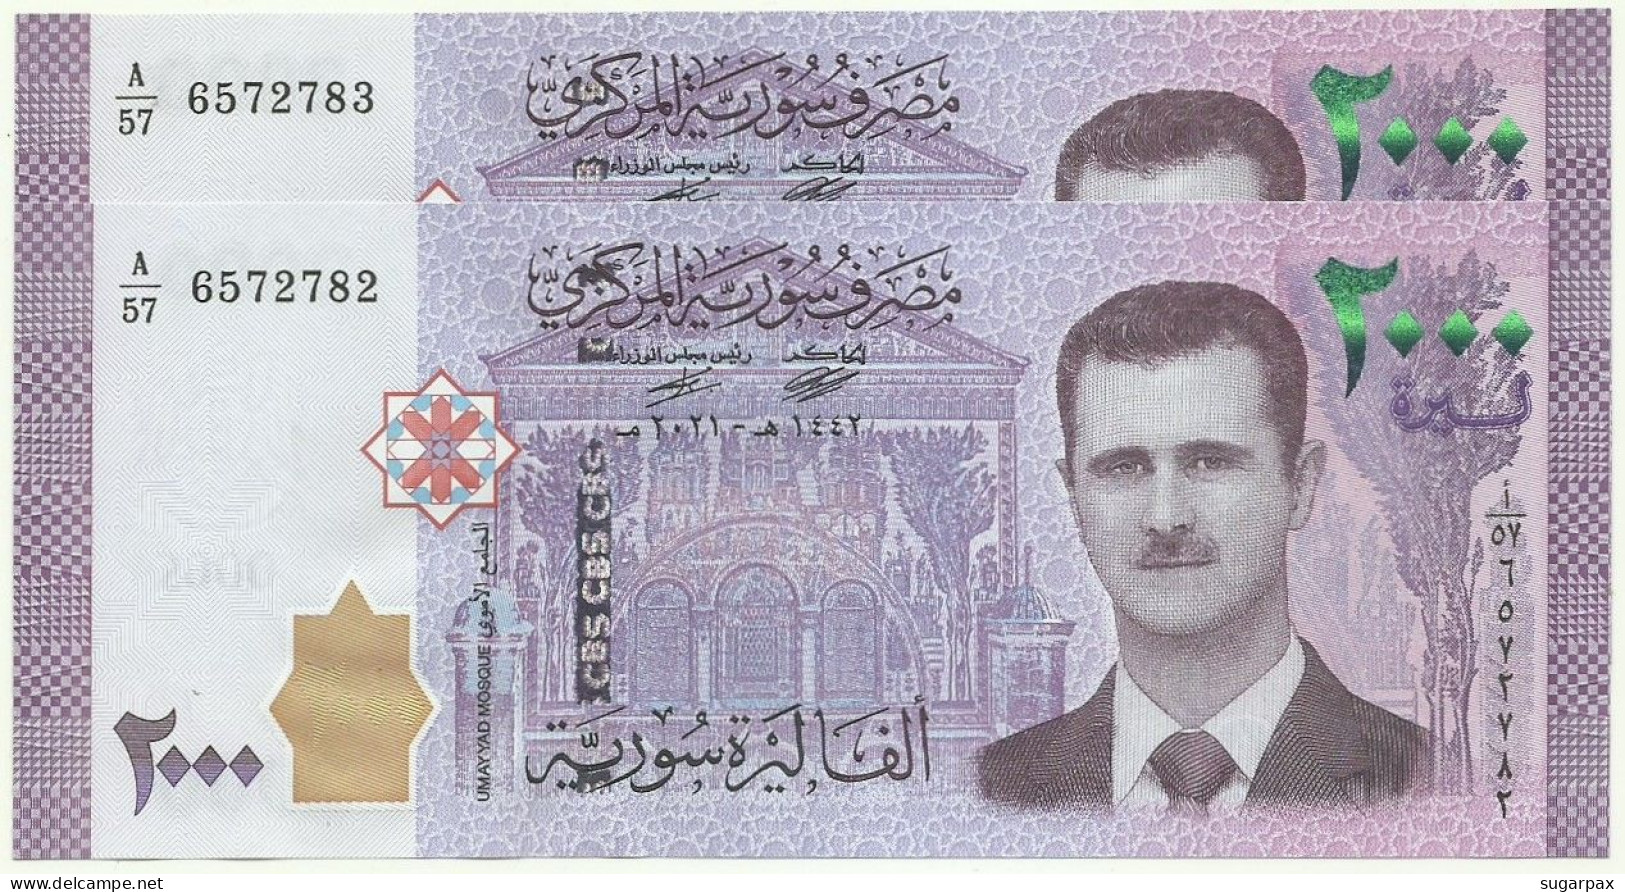 Syria - 2 X 2000 Syrian Pounds - 2021 / AH 1442 - Pick 117.NEW - Unc. - Serie A/57 - 2.000 - Siria